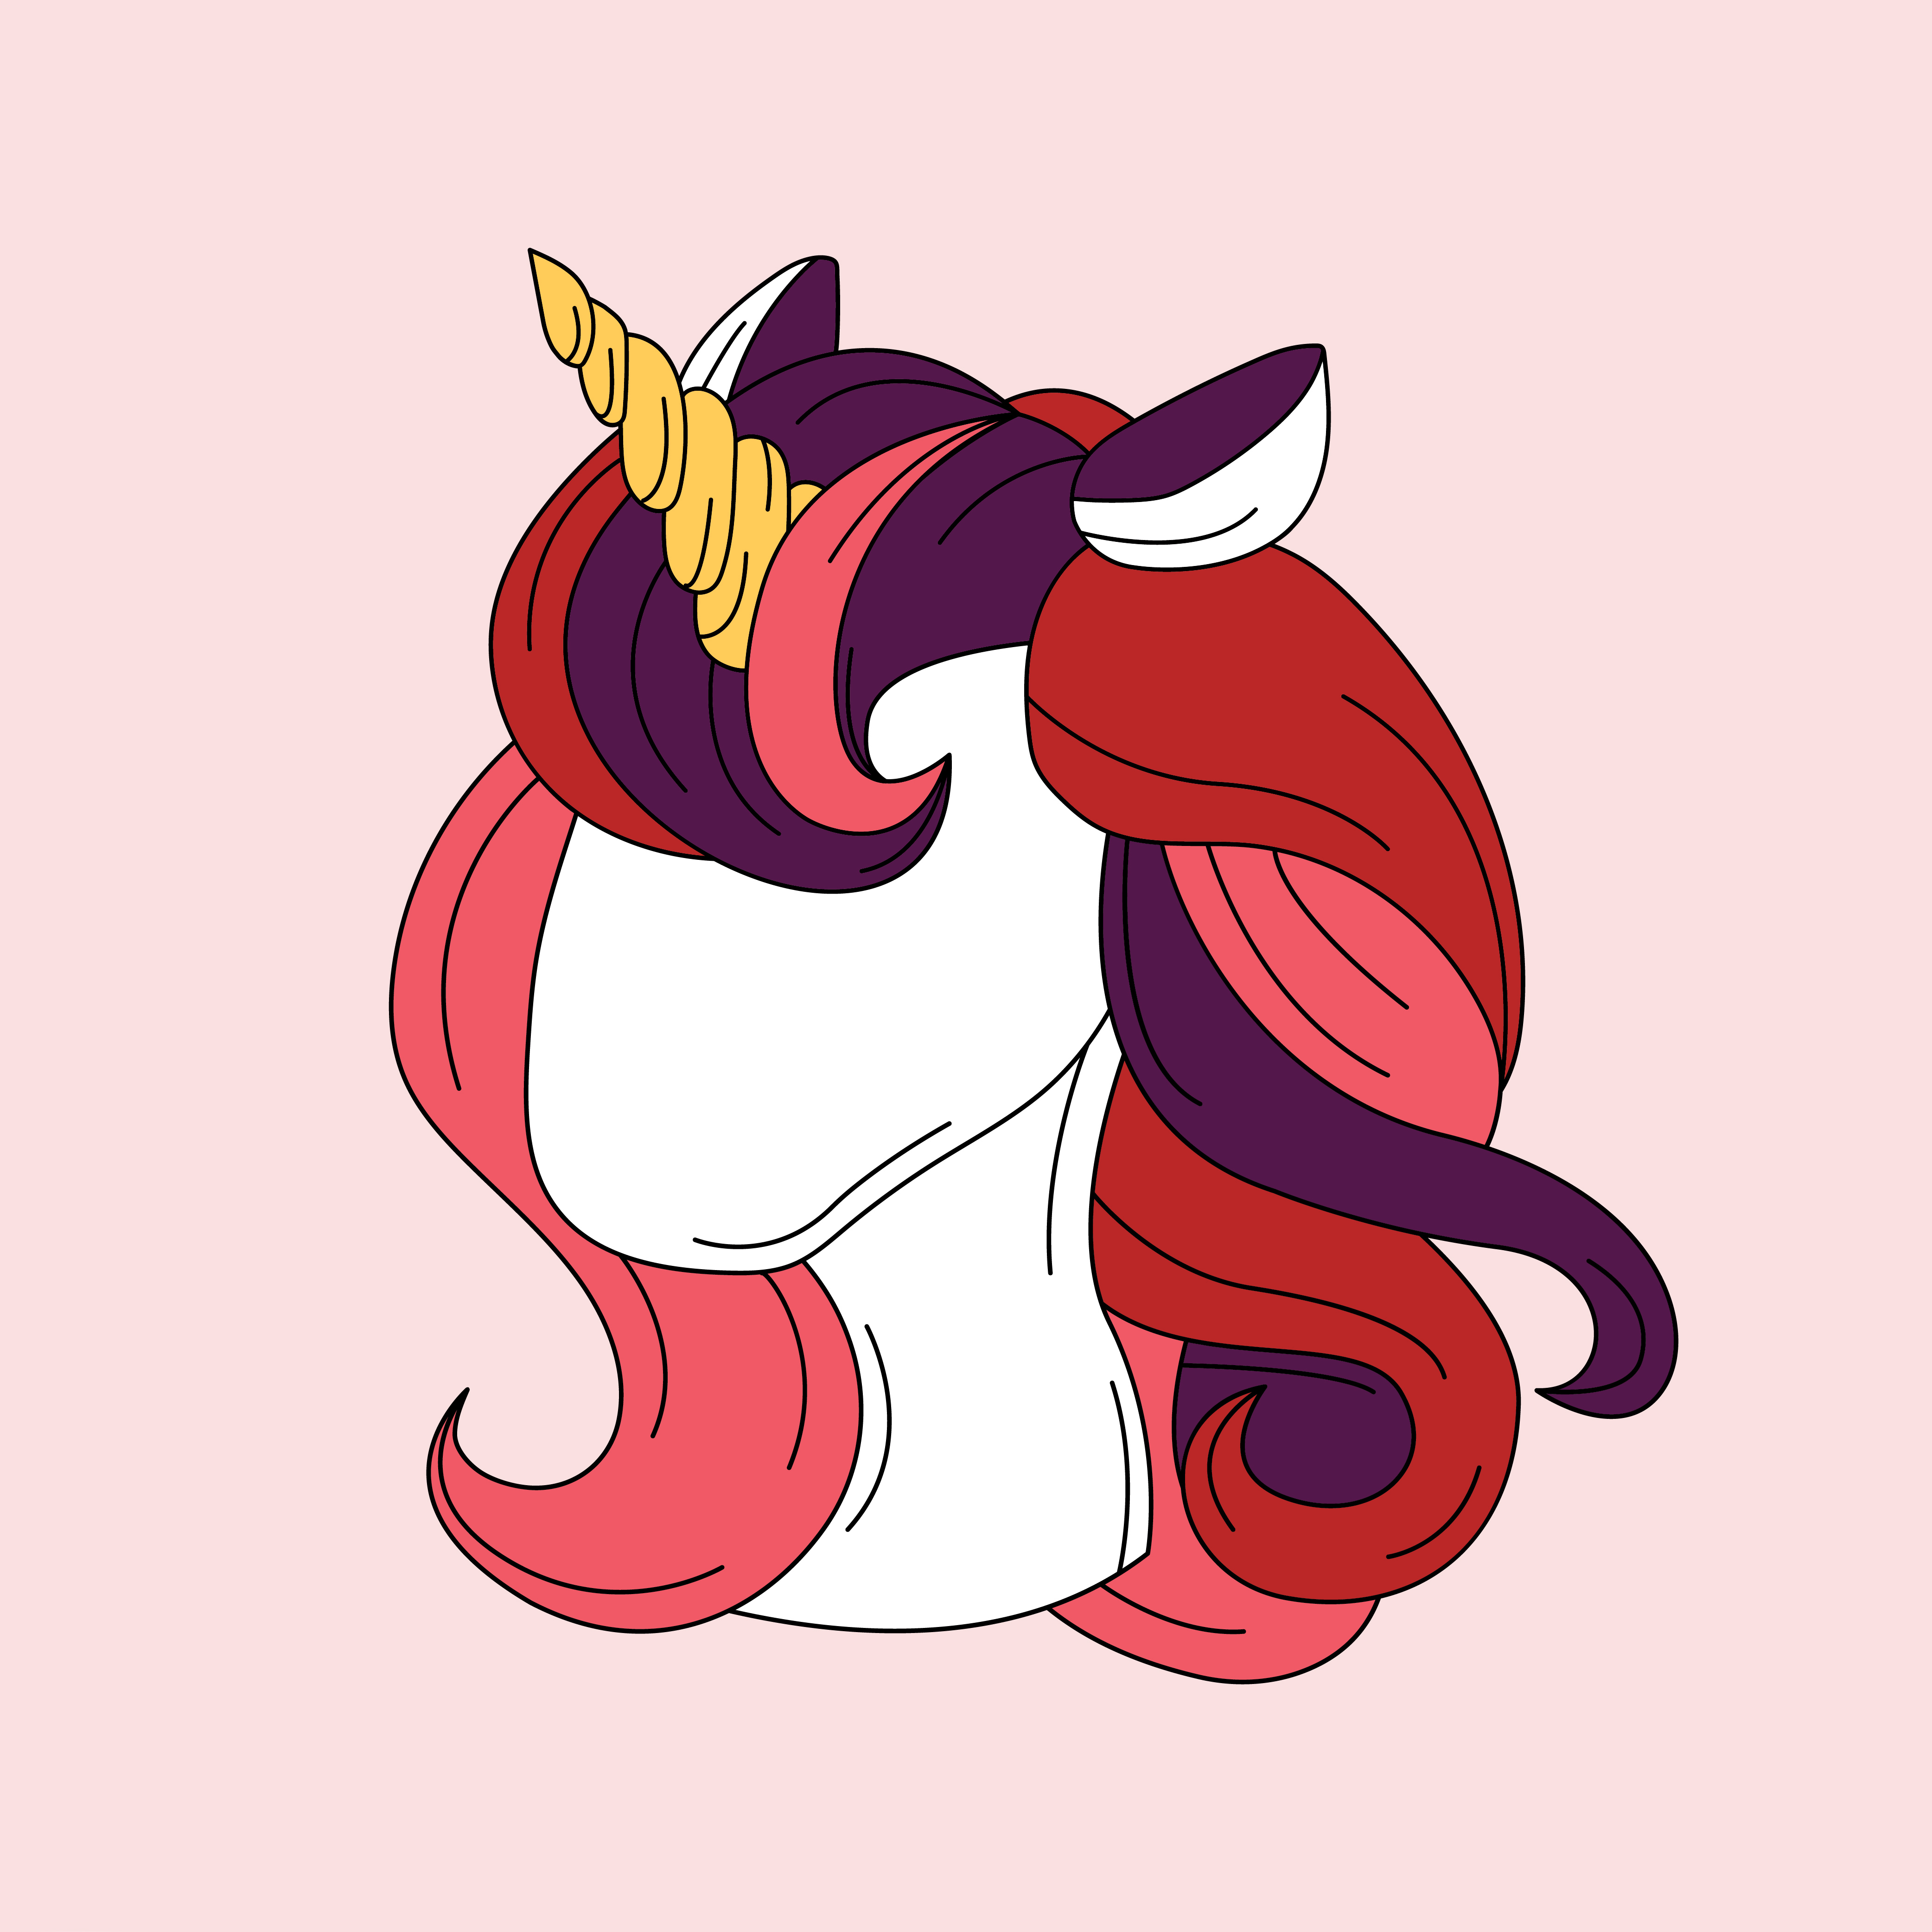 Cute and magical unicorn vector - Download Free Vectors, Clipart